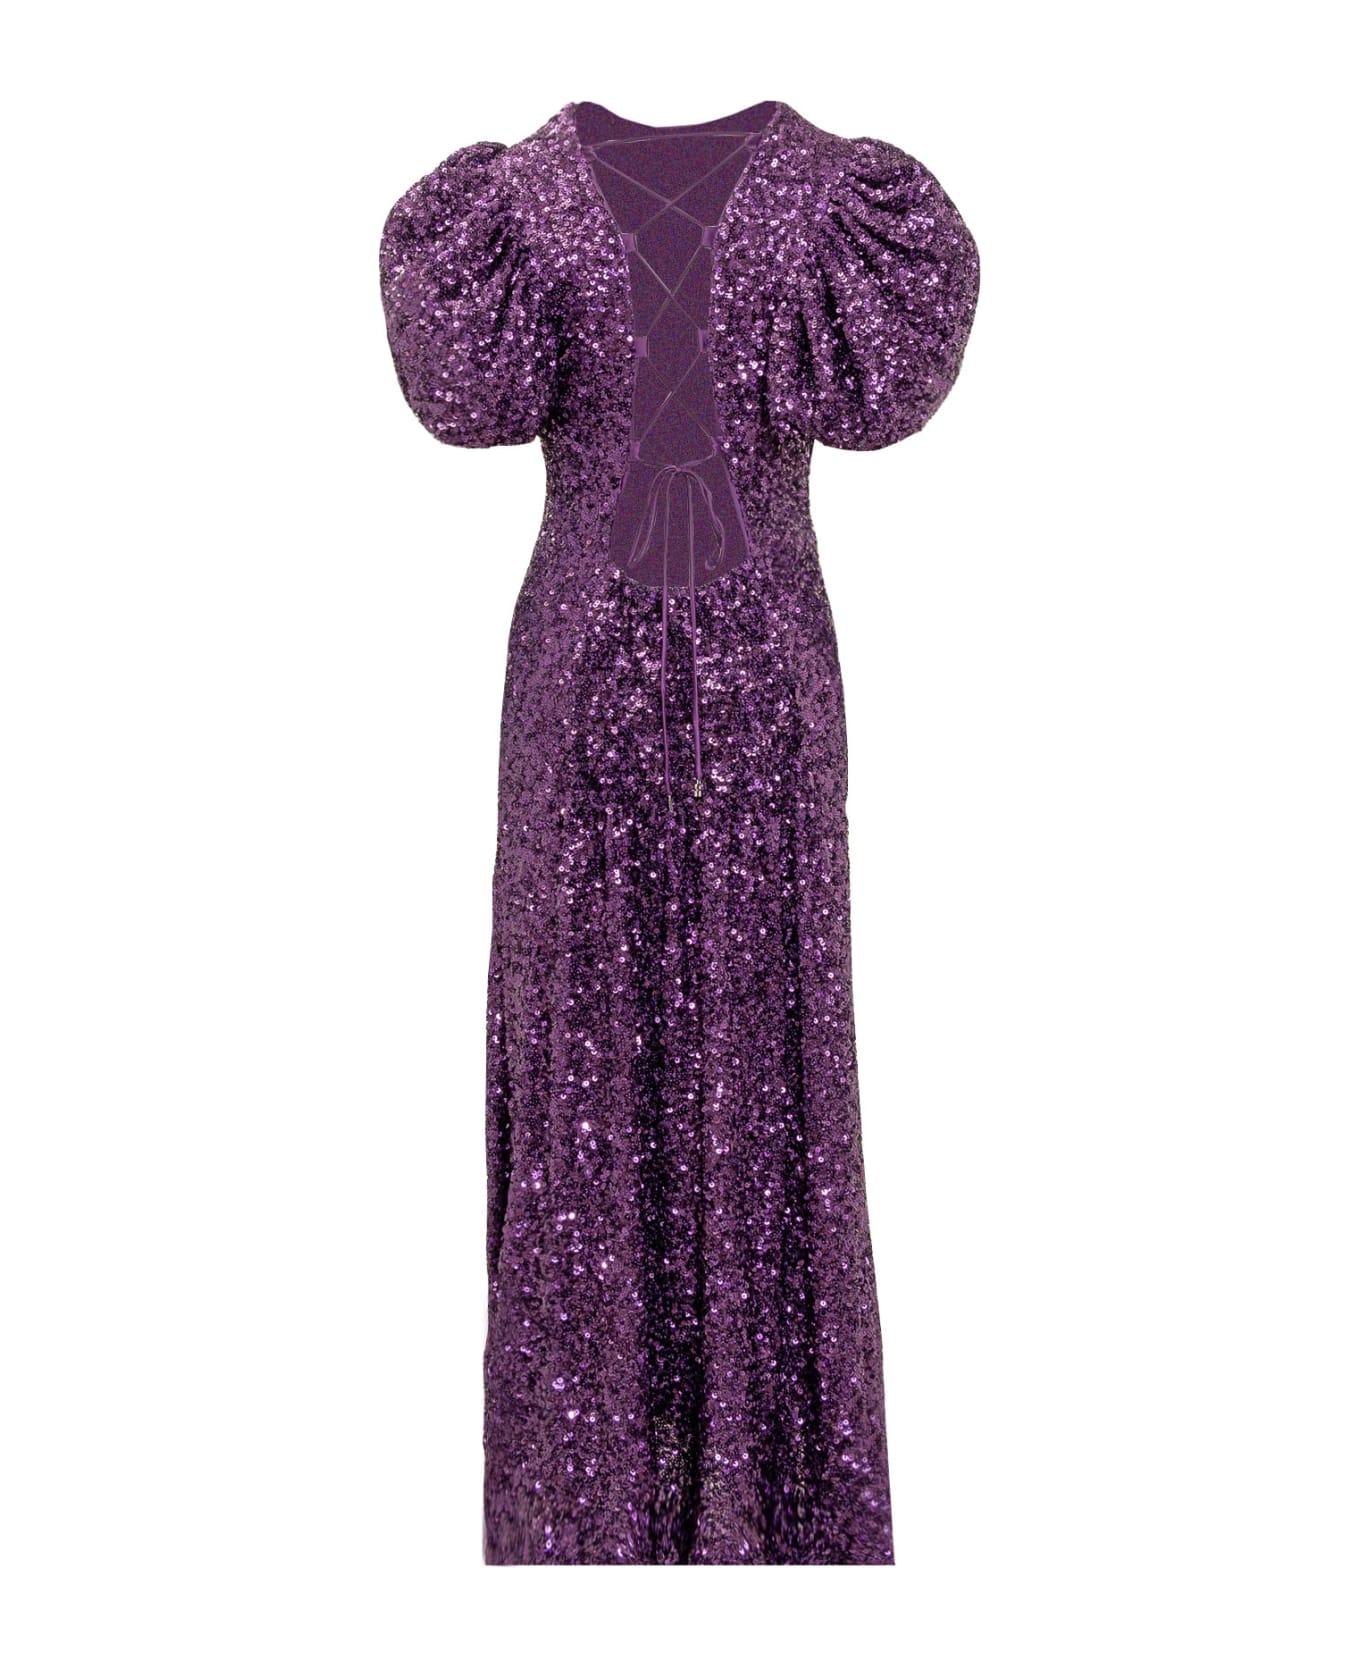 Rotate by Birger Christensen Sequins Puff Dress - Violet